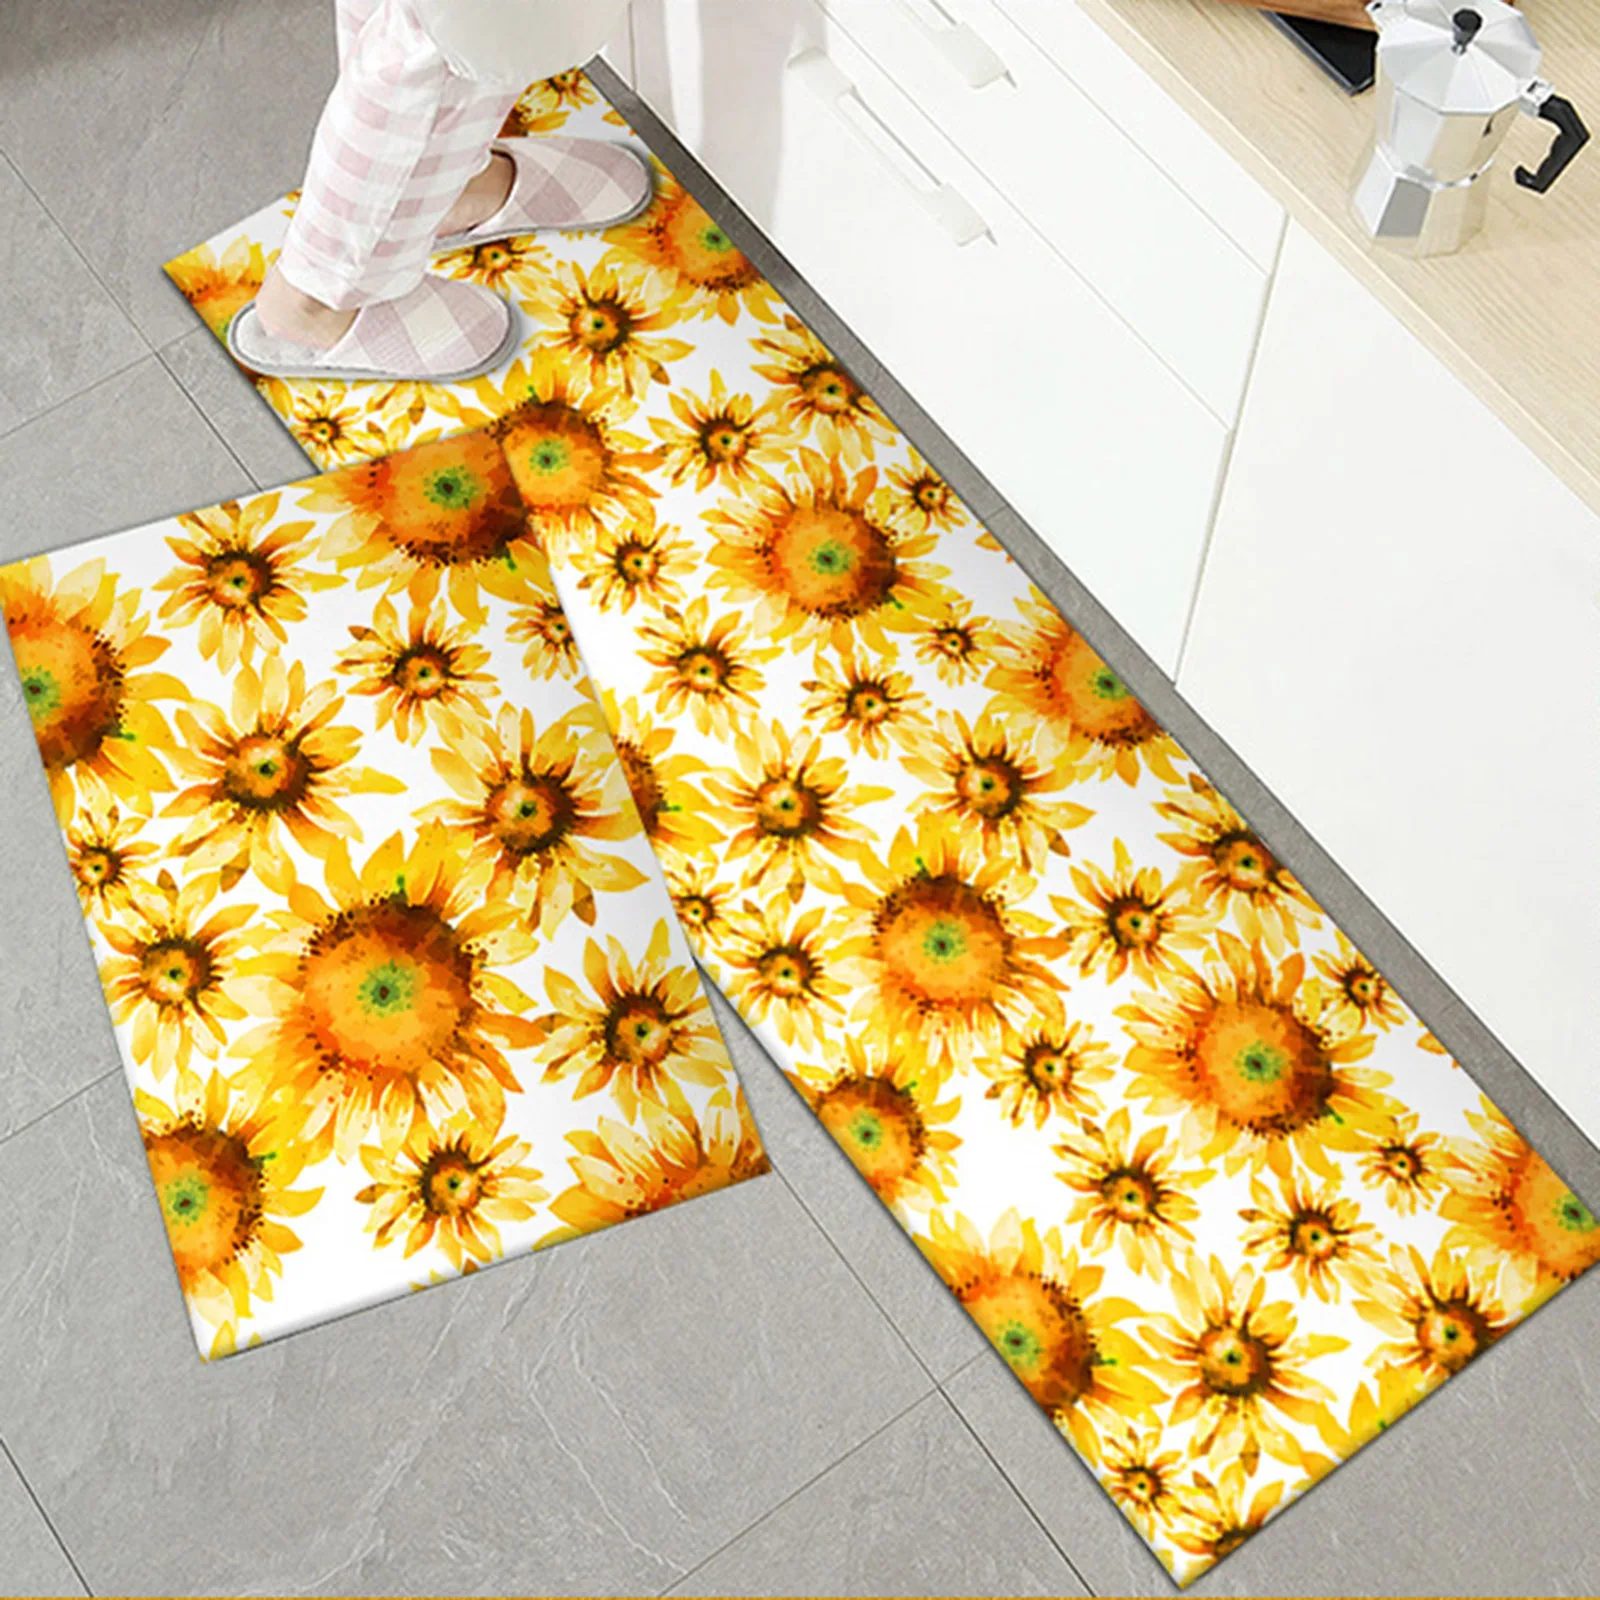 

Kitchen Mat 2pcs Sunflower Non-Skid Kitchen Rug Runner Floor Mat Carpet for Kitchen Floor Bathroom Laundry Doorway